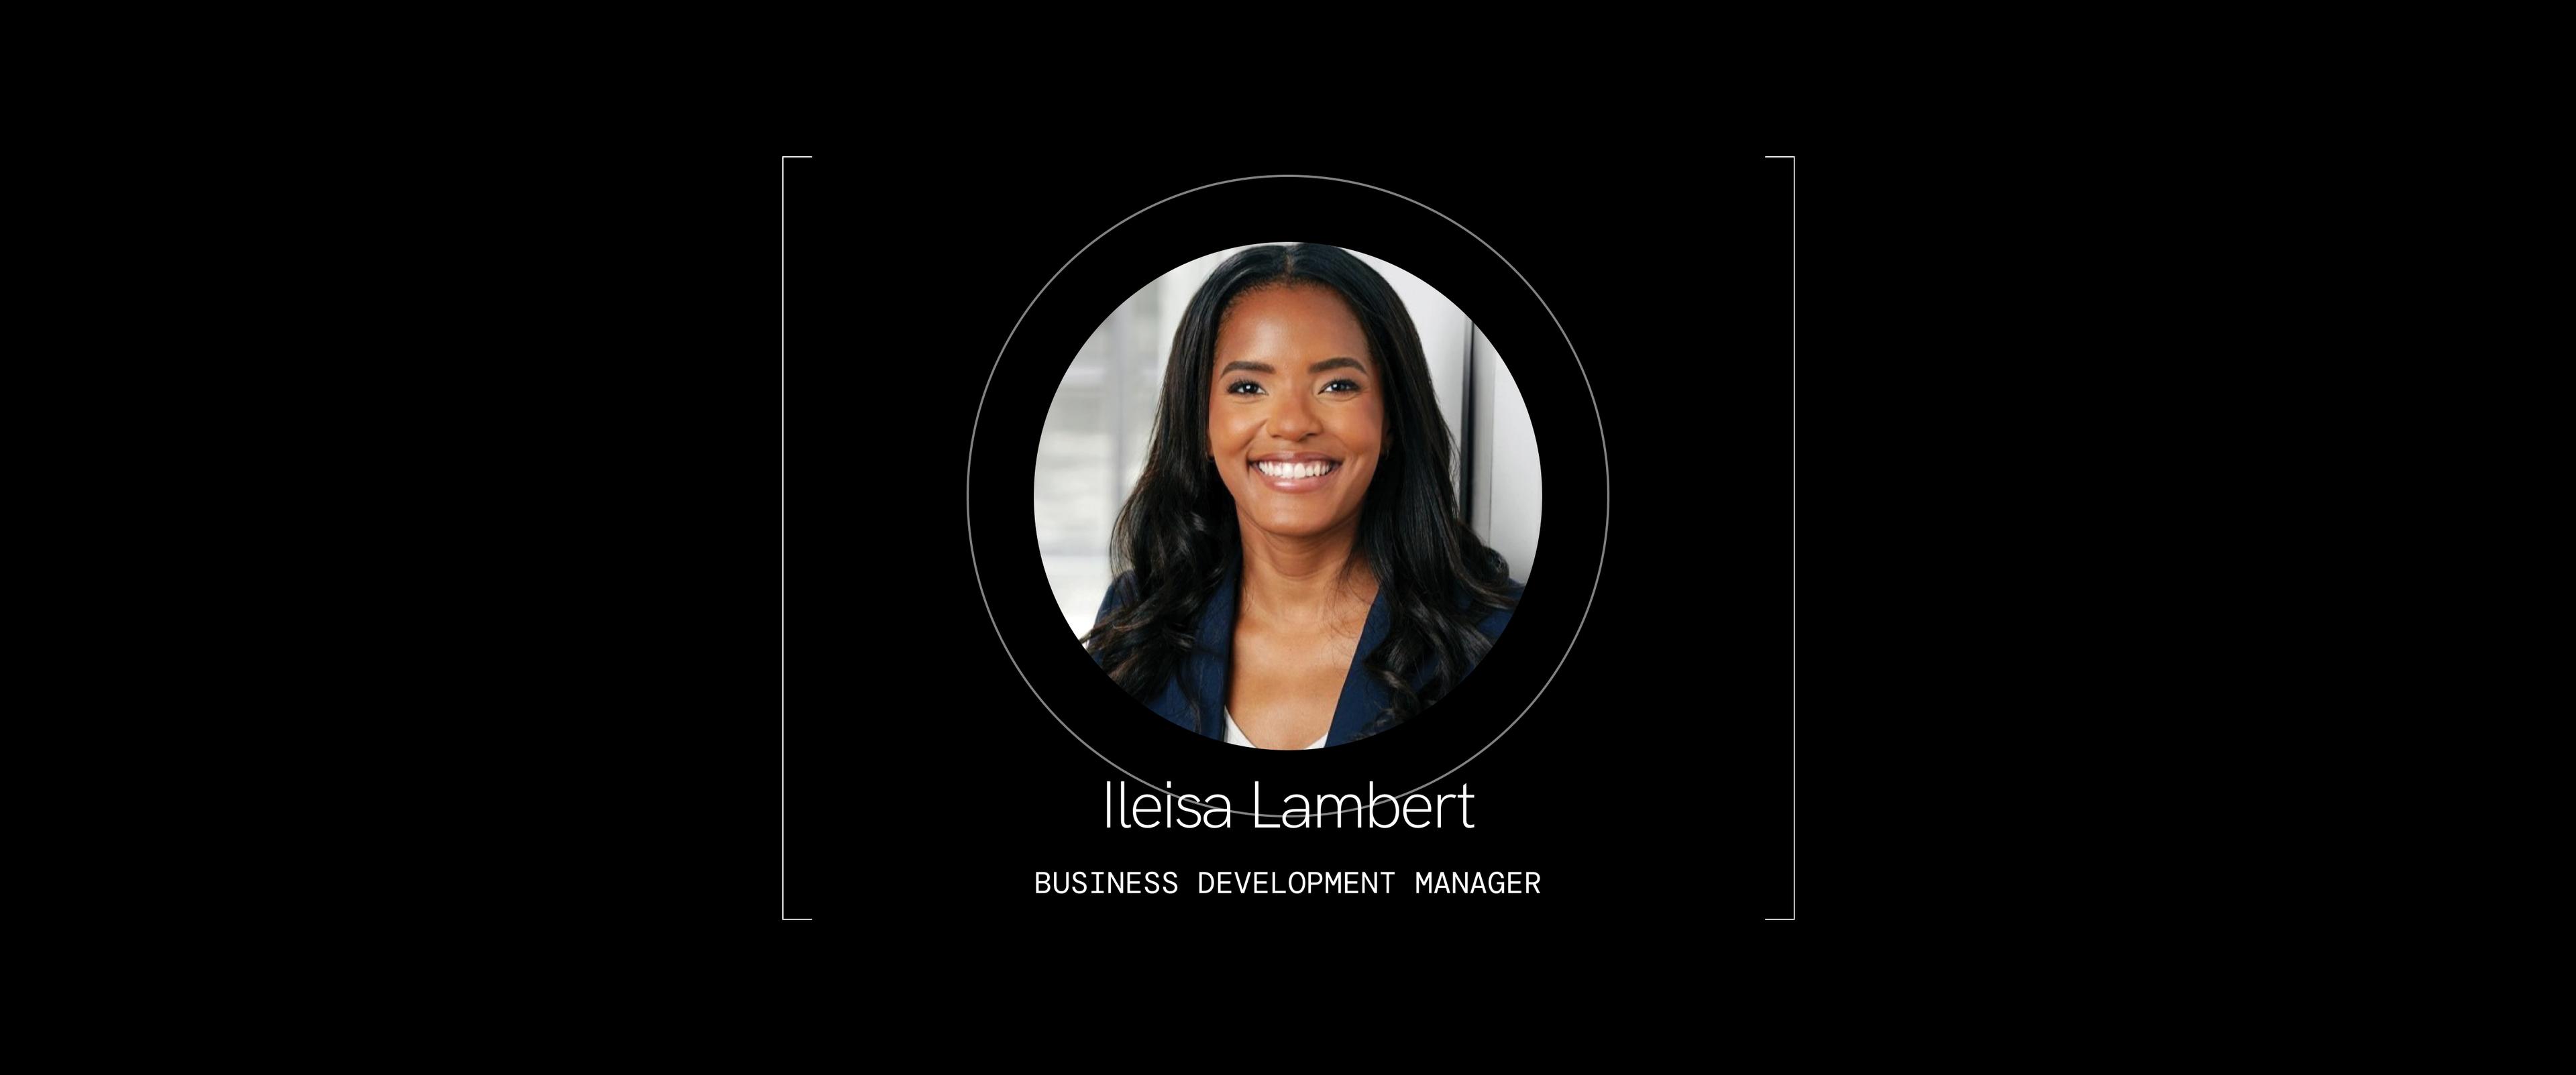 Ileisa Lambert, Business Development Manager